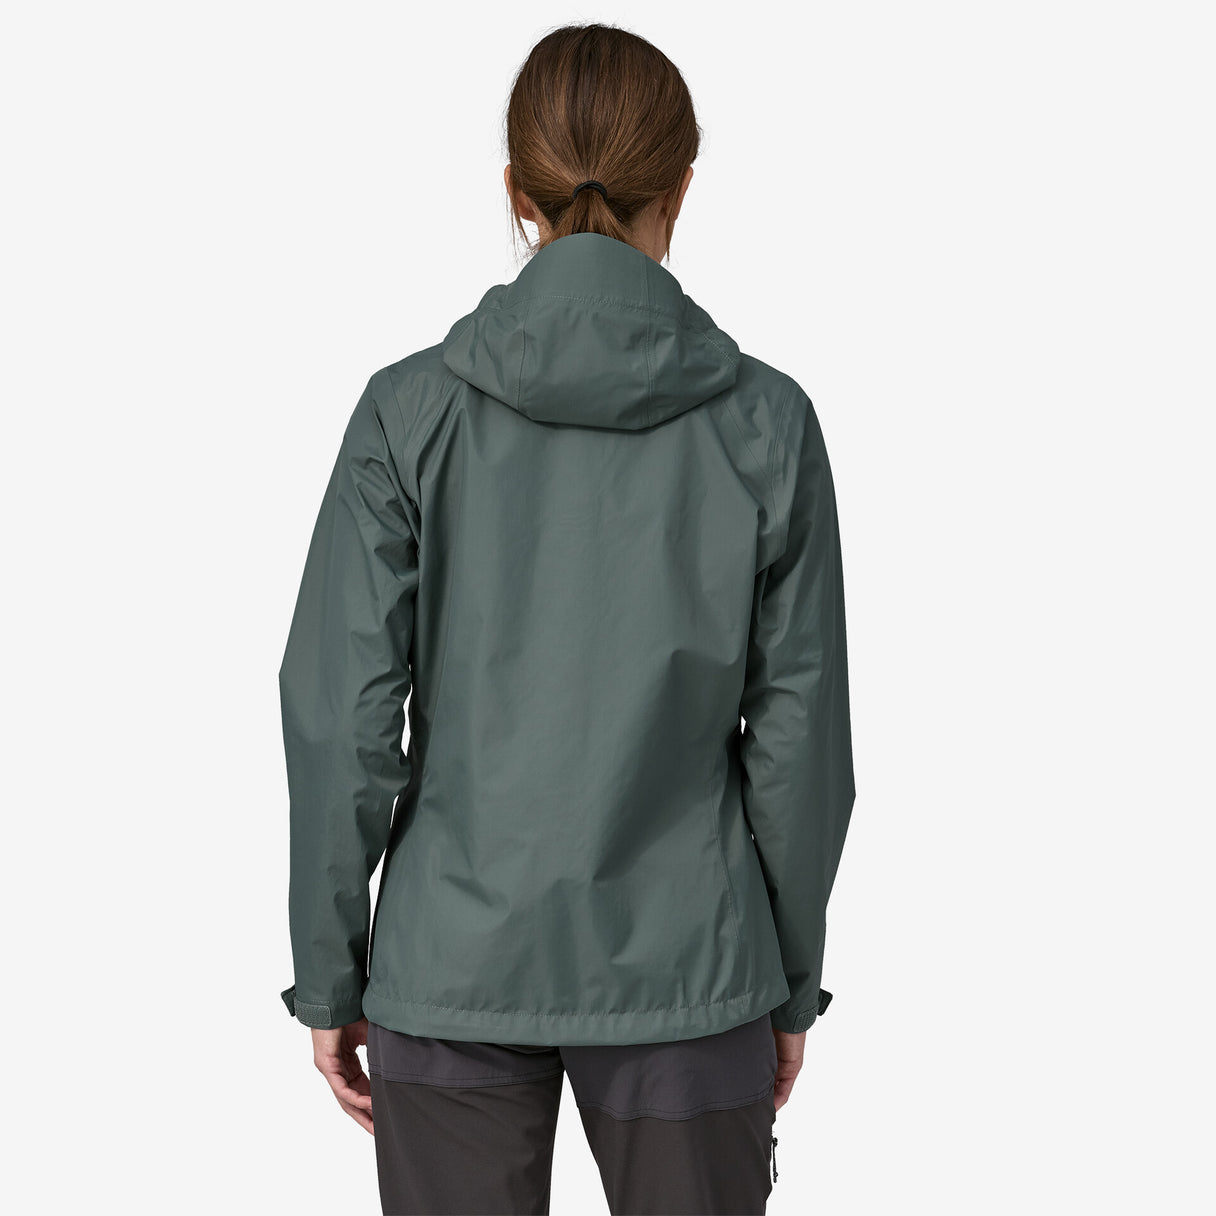 Patagonia Women's Torrentshell 3L Jacket - Noveau Green